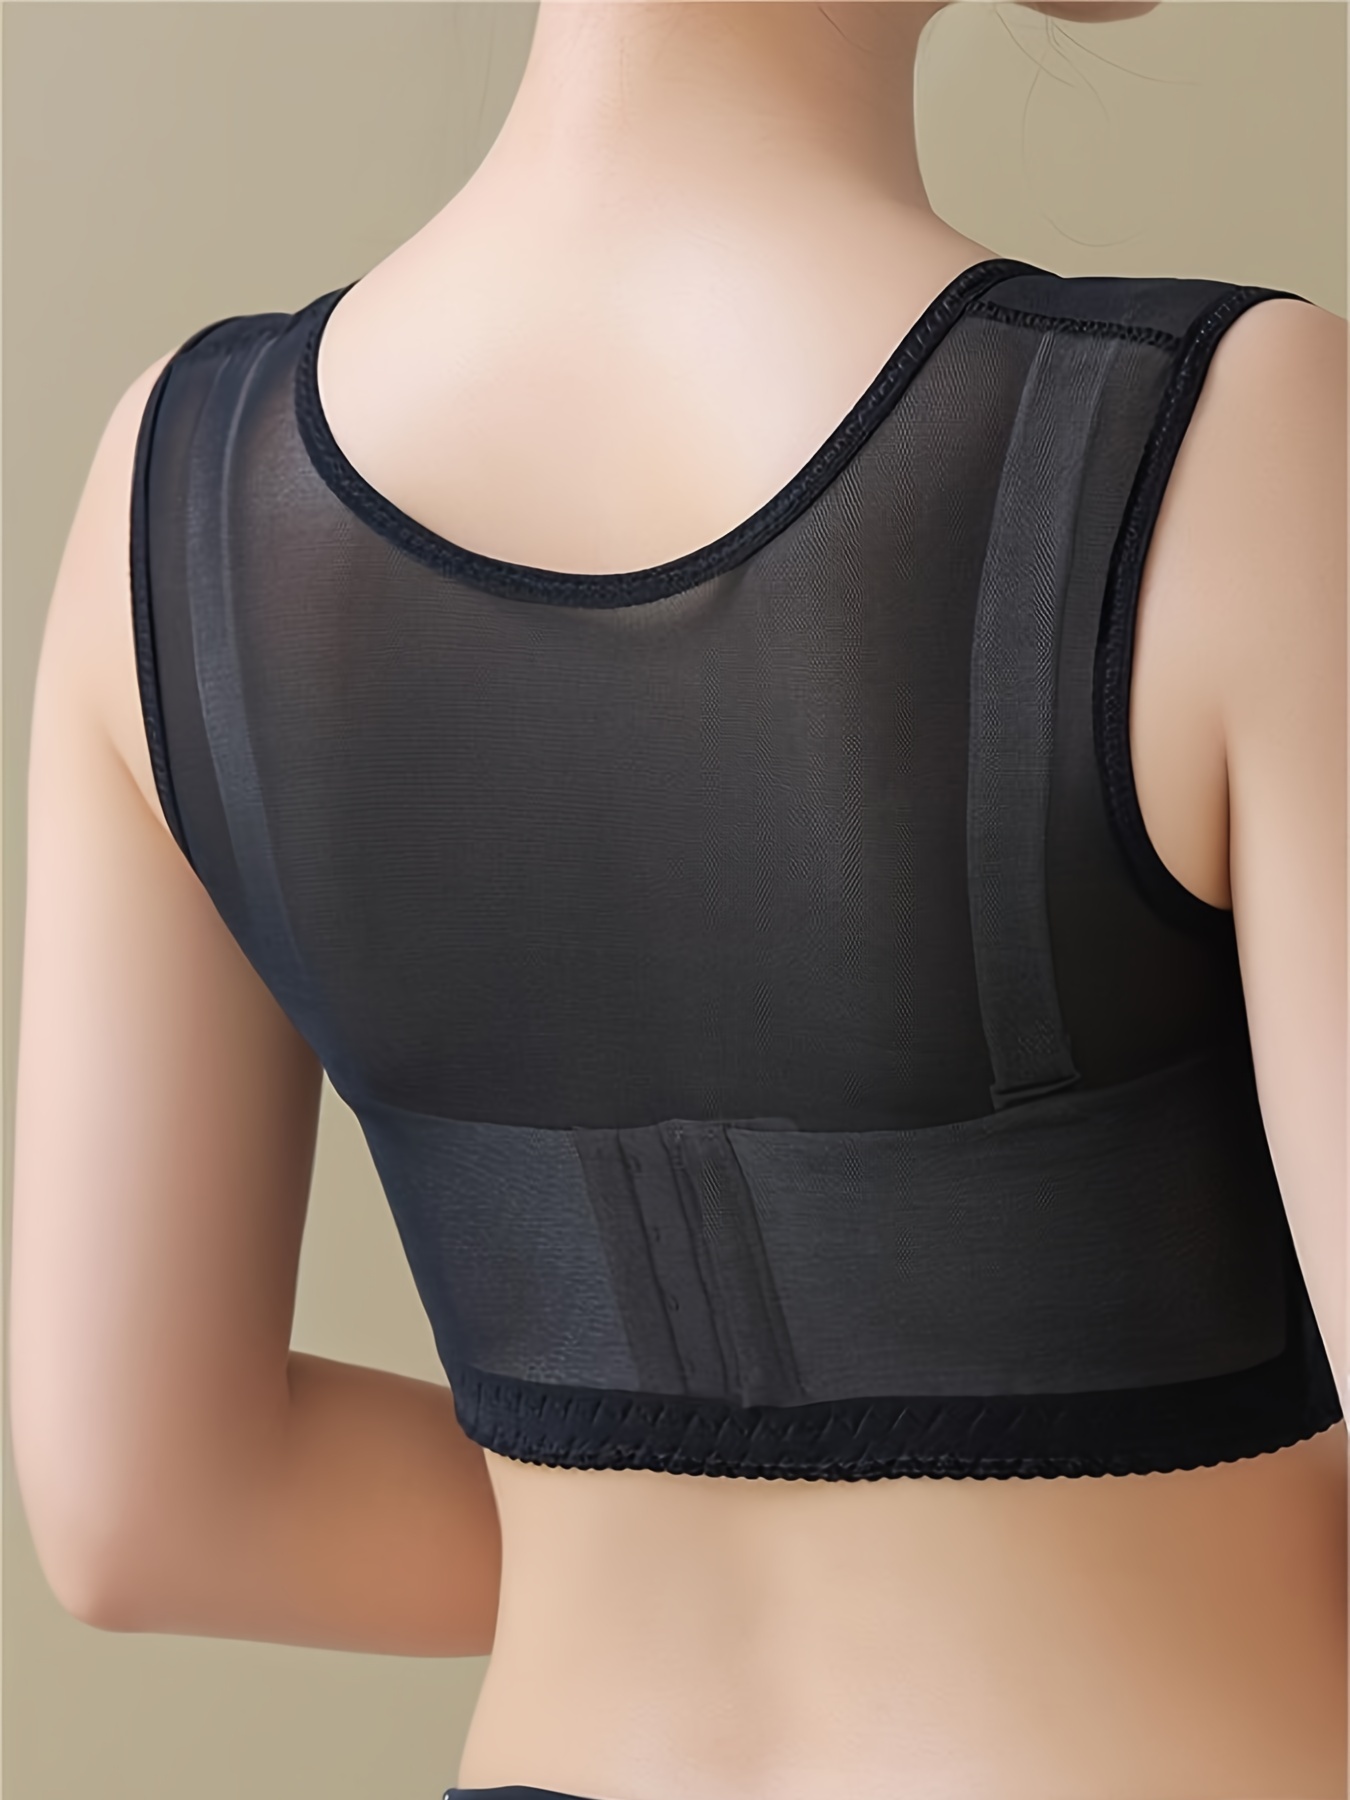 Adjustable Underwear Lady Chest Breast Support Back Shoulder Posture  Corrector Band Female X Type Pattern Body Sculpting Strap Vest Prevent  Humpback